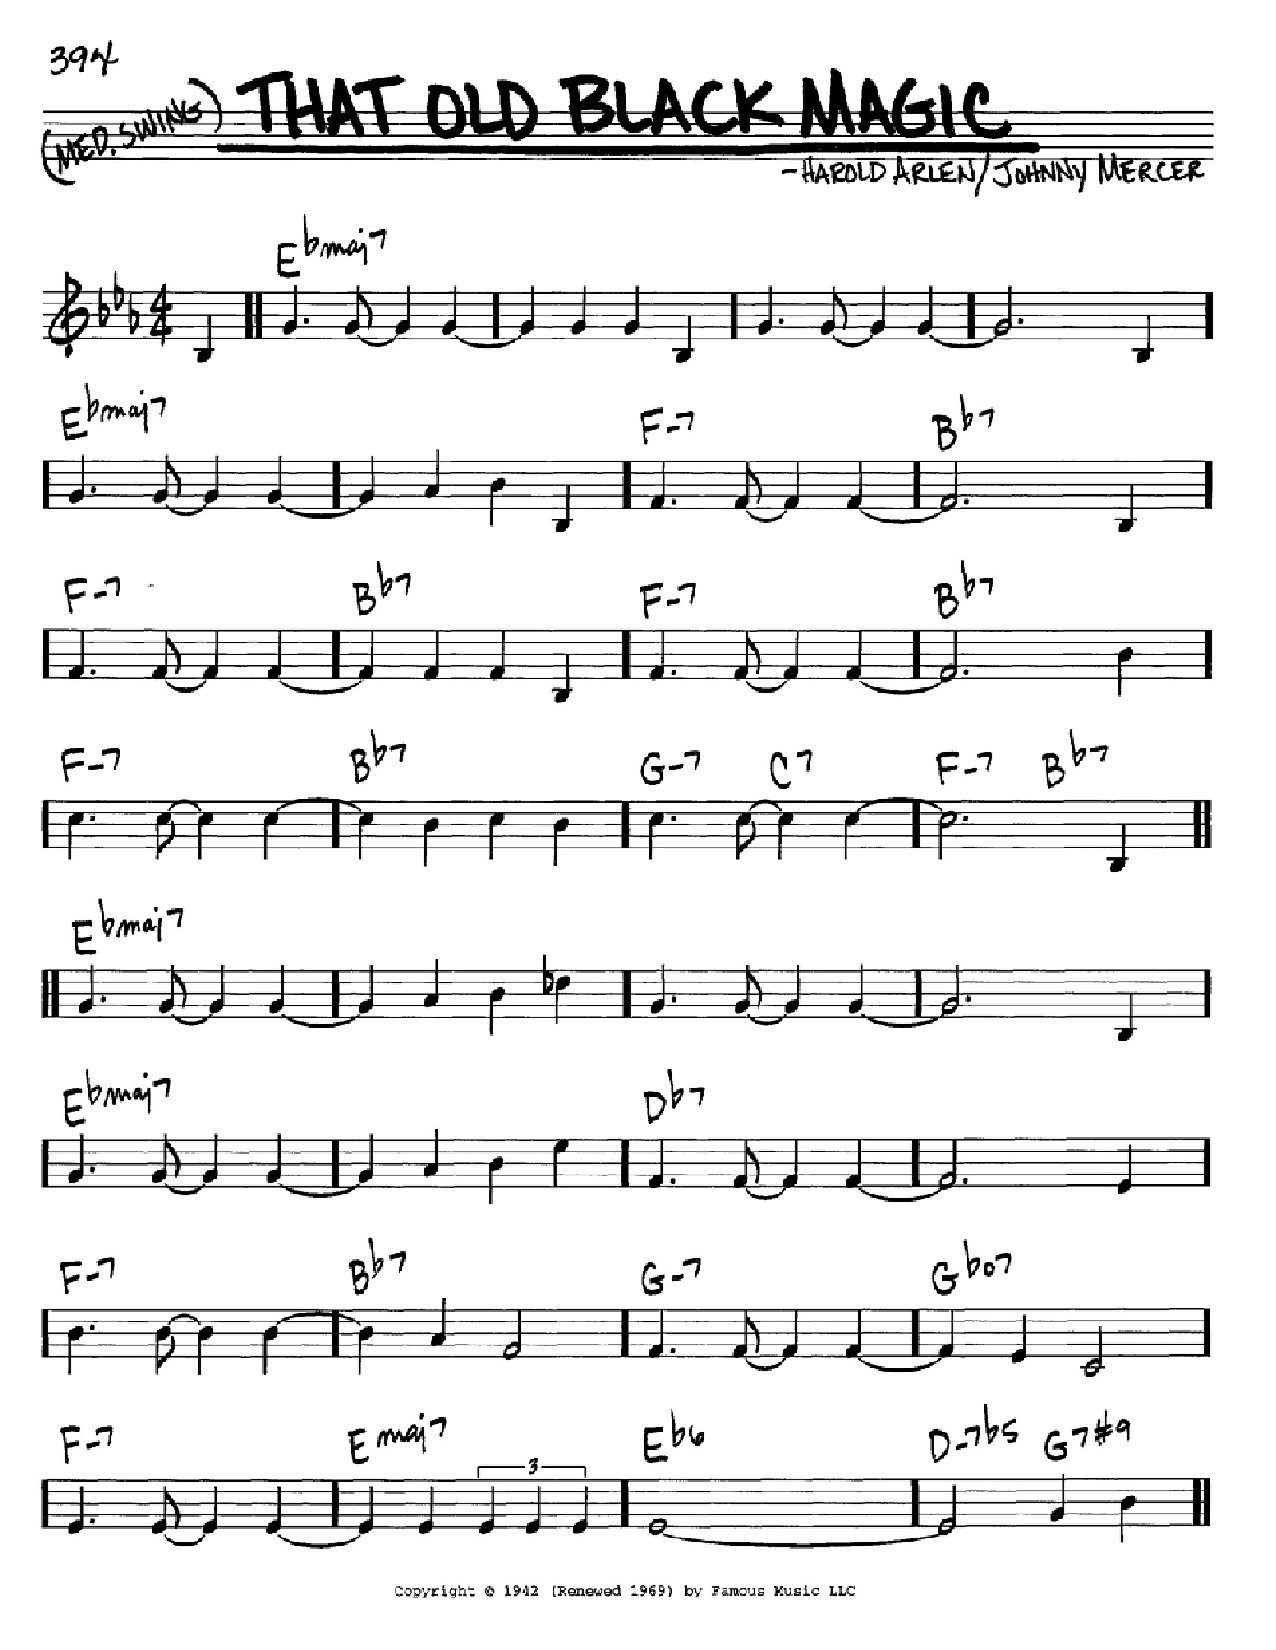 Harold Arlen That Old Black Magic Sheet Music Notes & Chords for Ukulele - Download or Print PDF